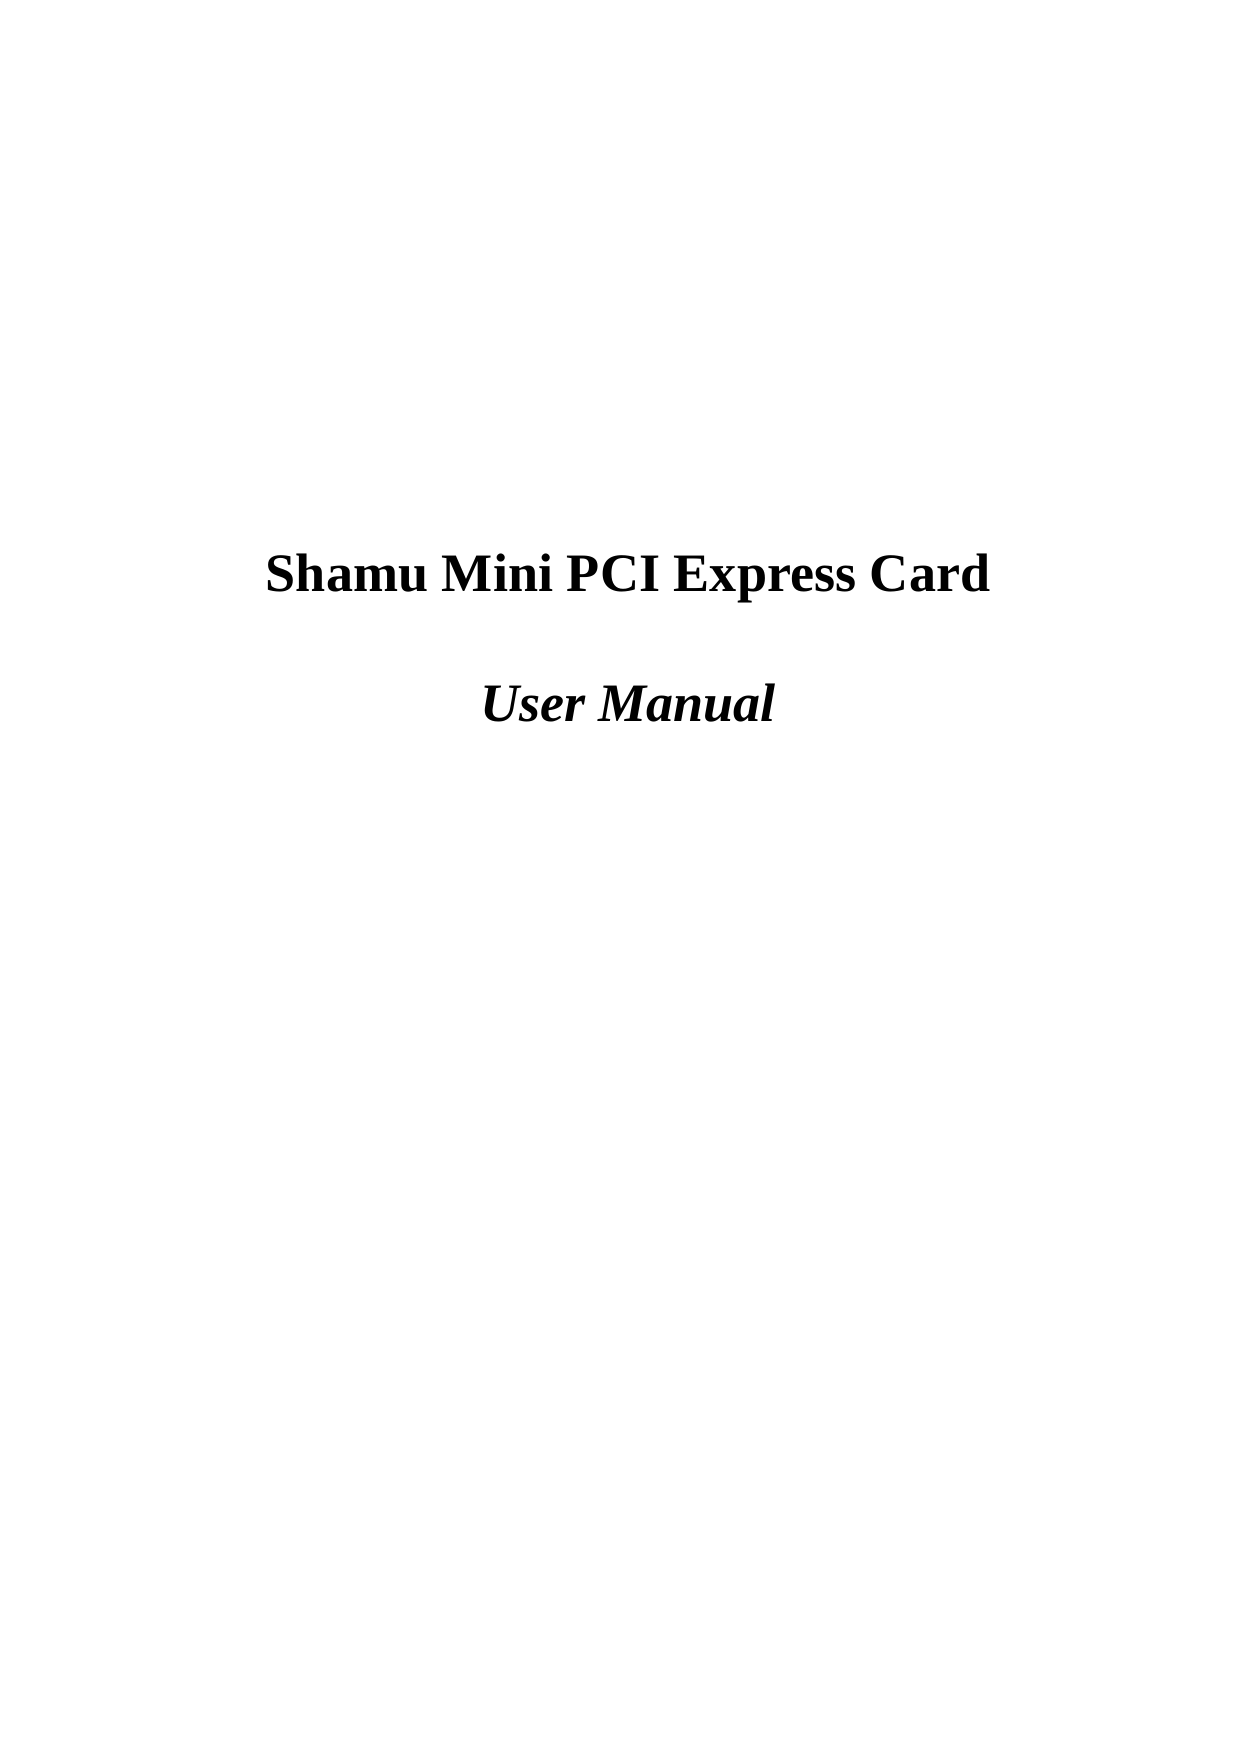       Shamu Mini PCI Express Card  User Manual 